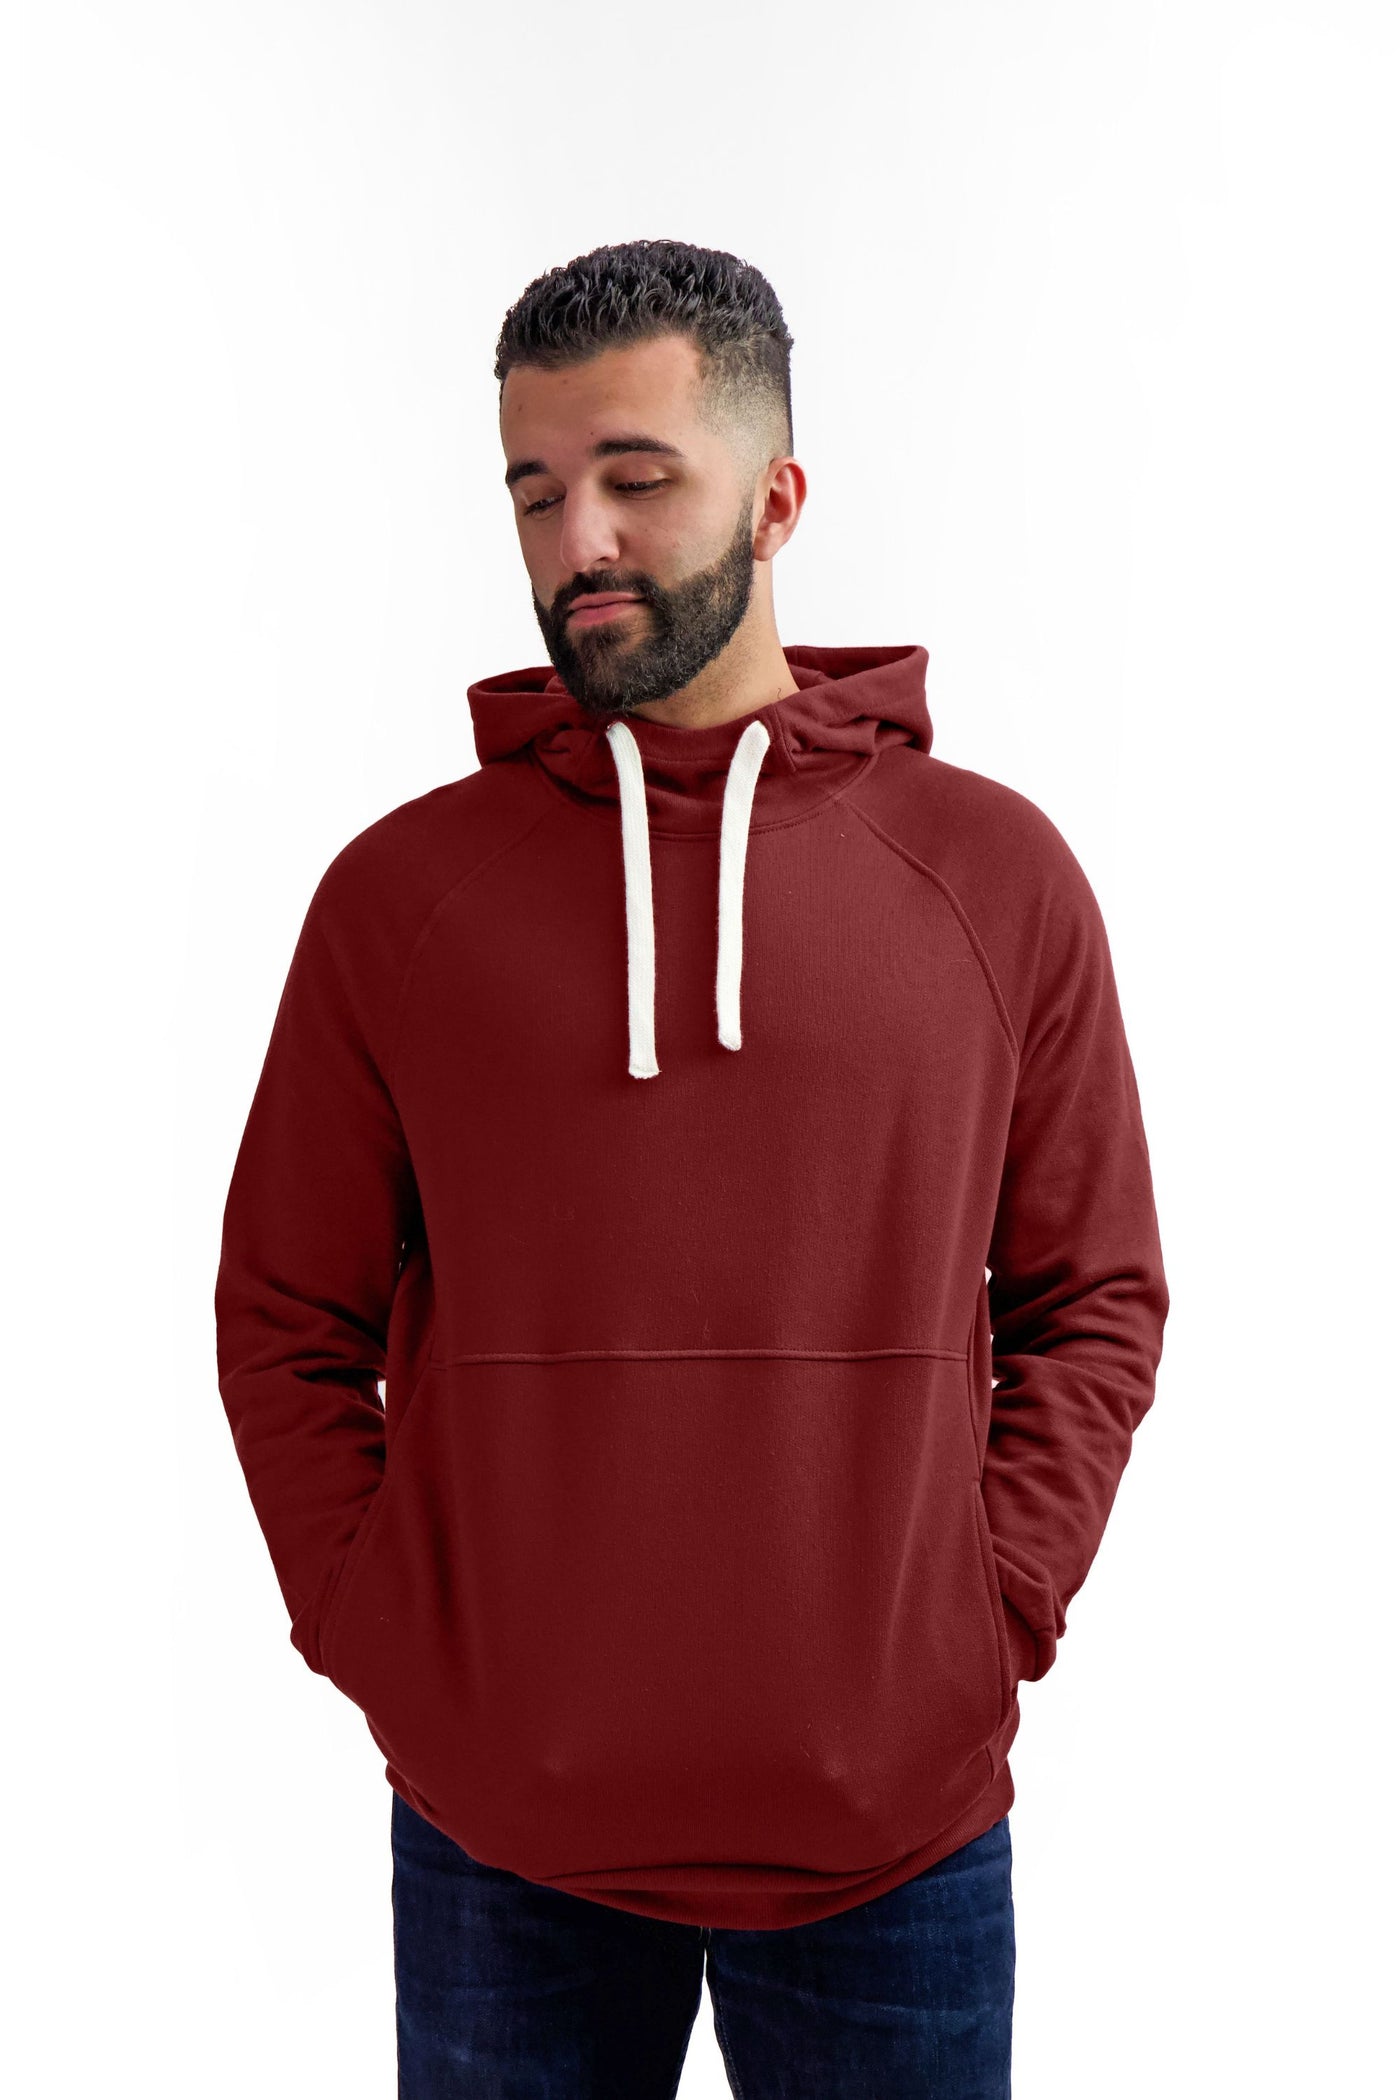 wholesale customise hoodie